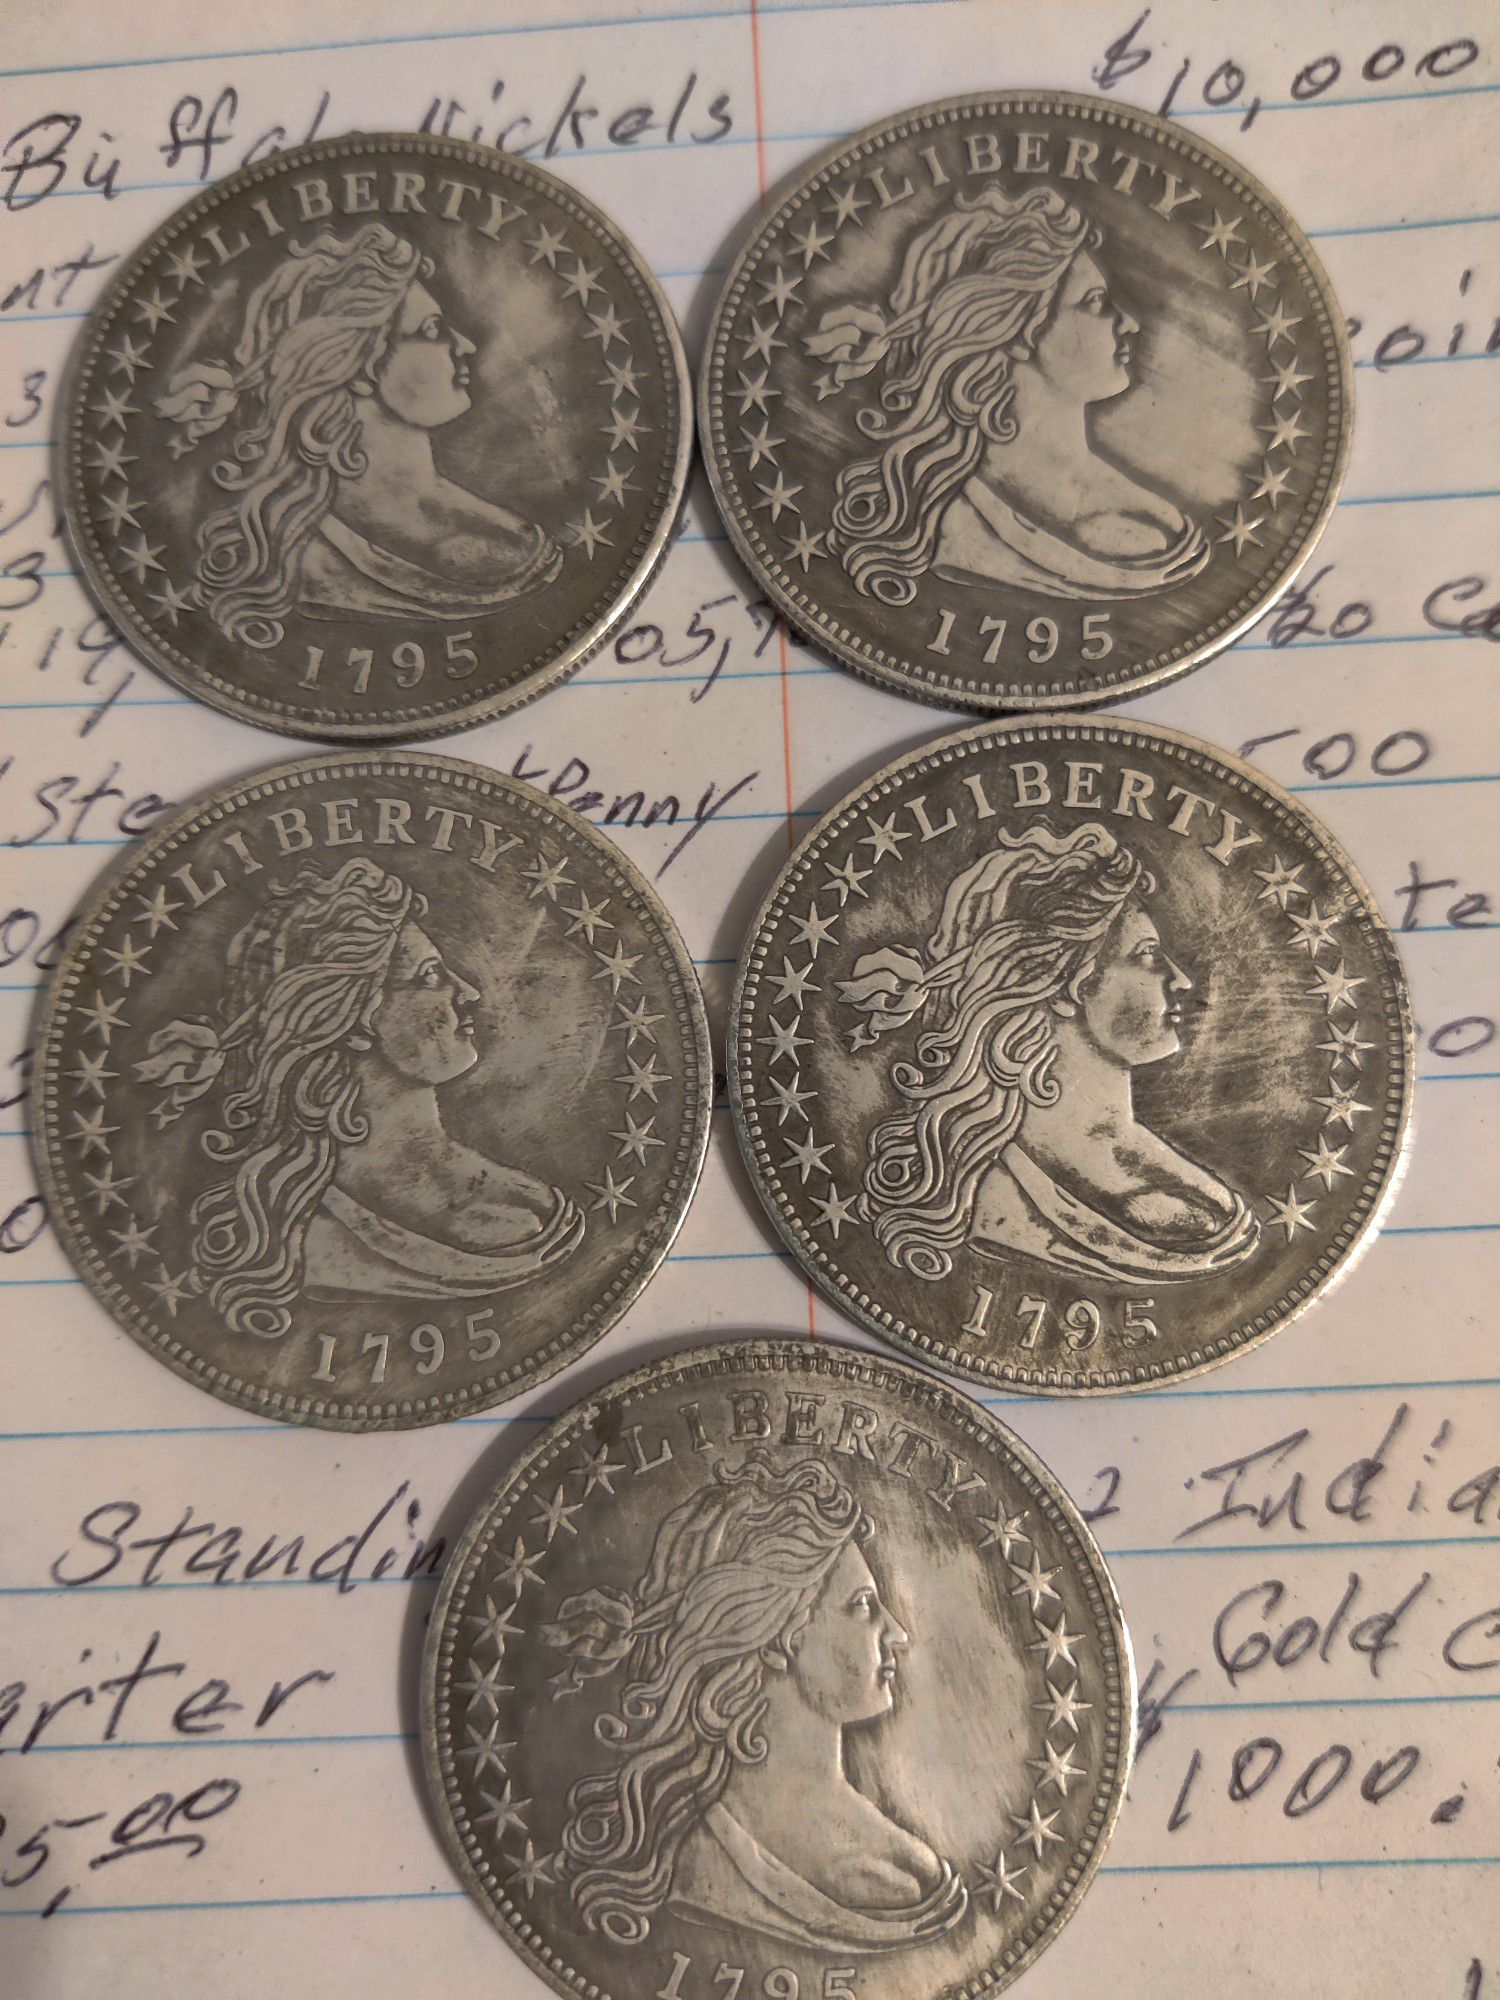 5---1795 Draped bust silver dollars